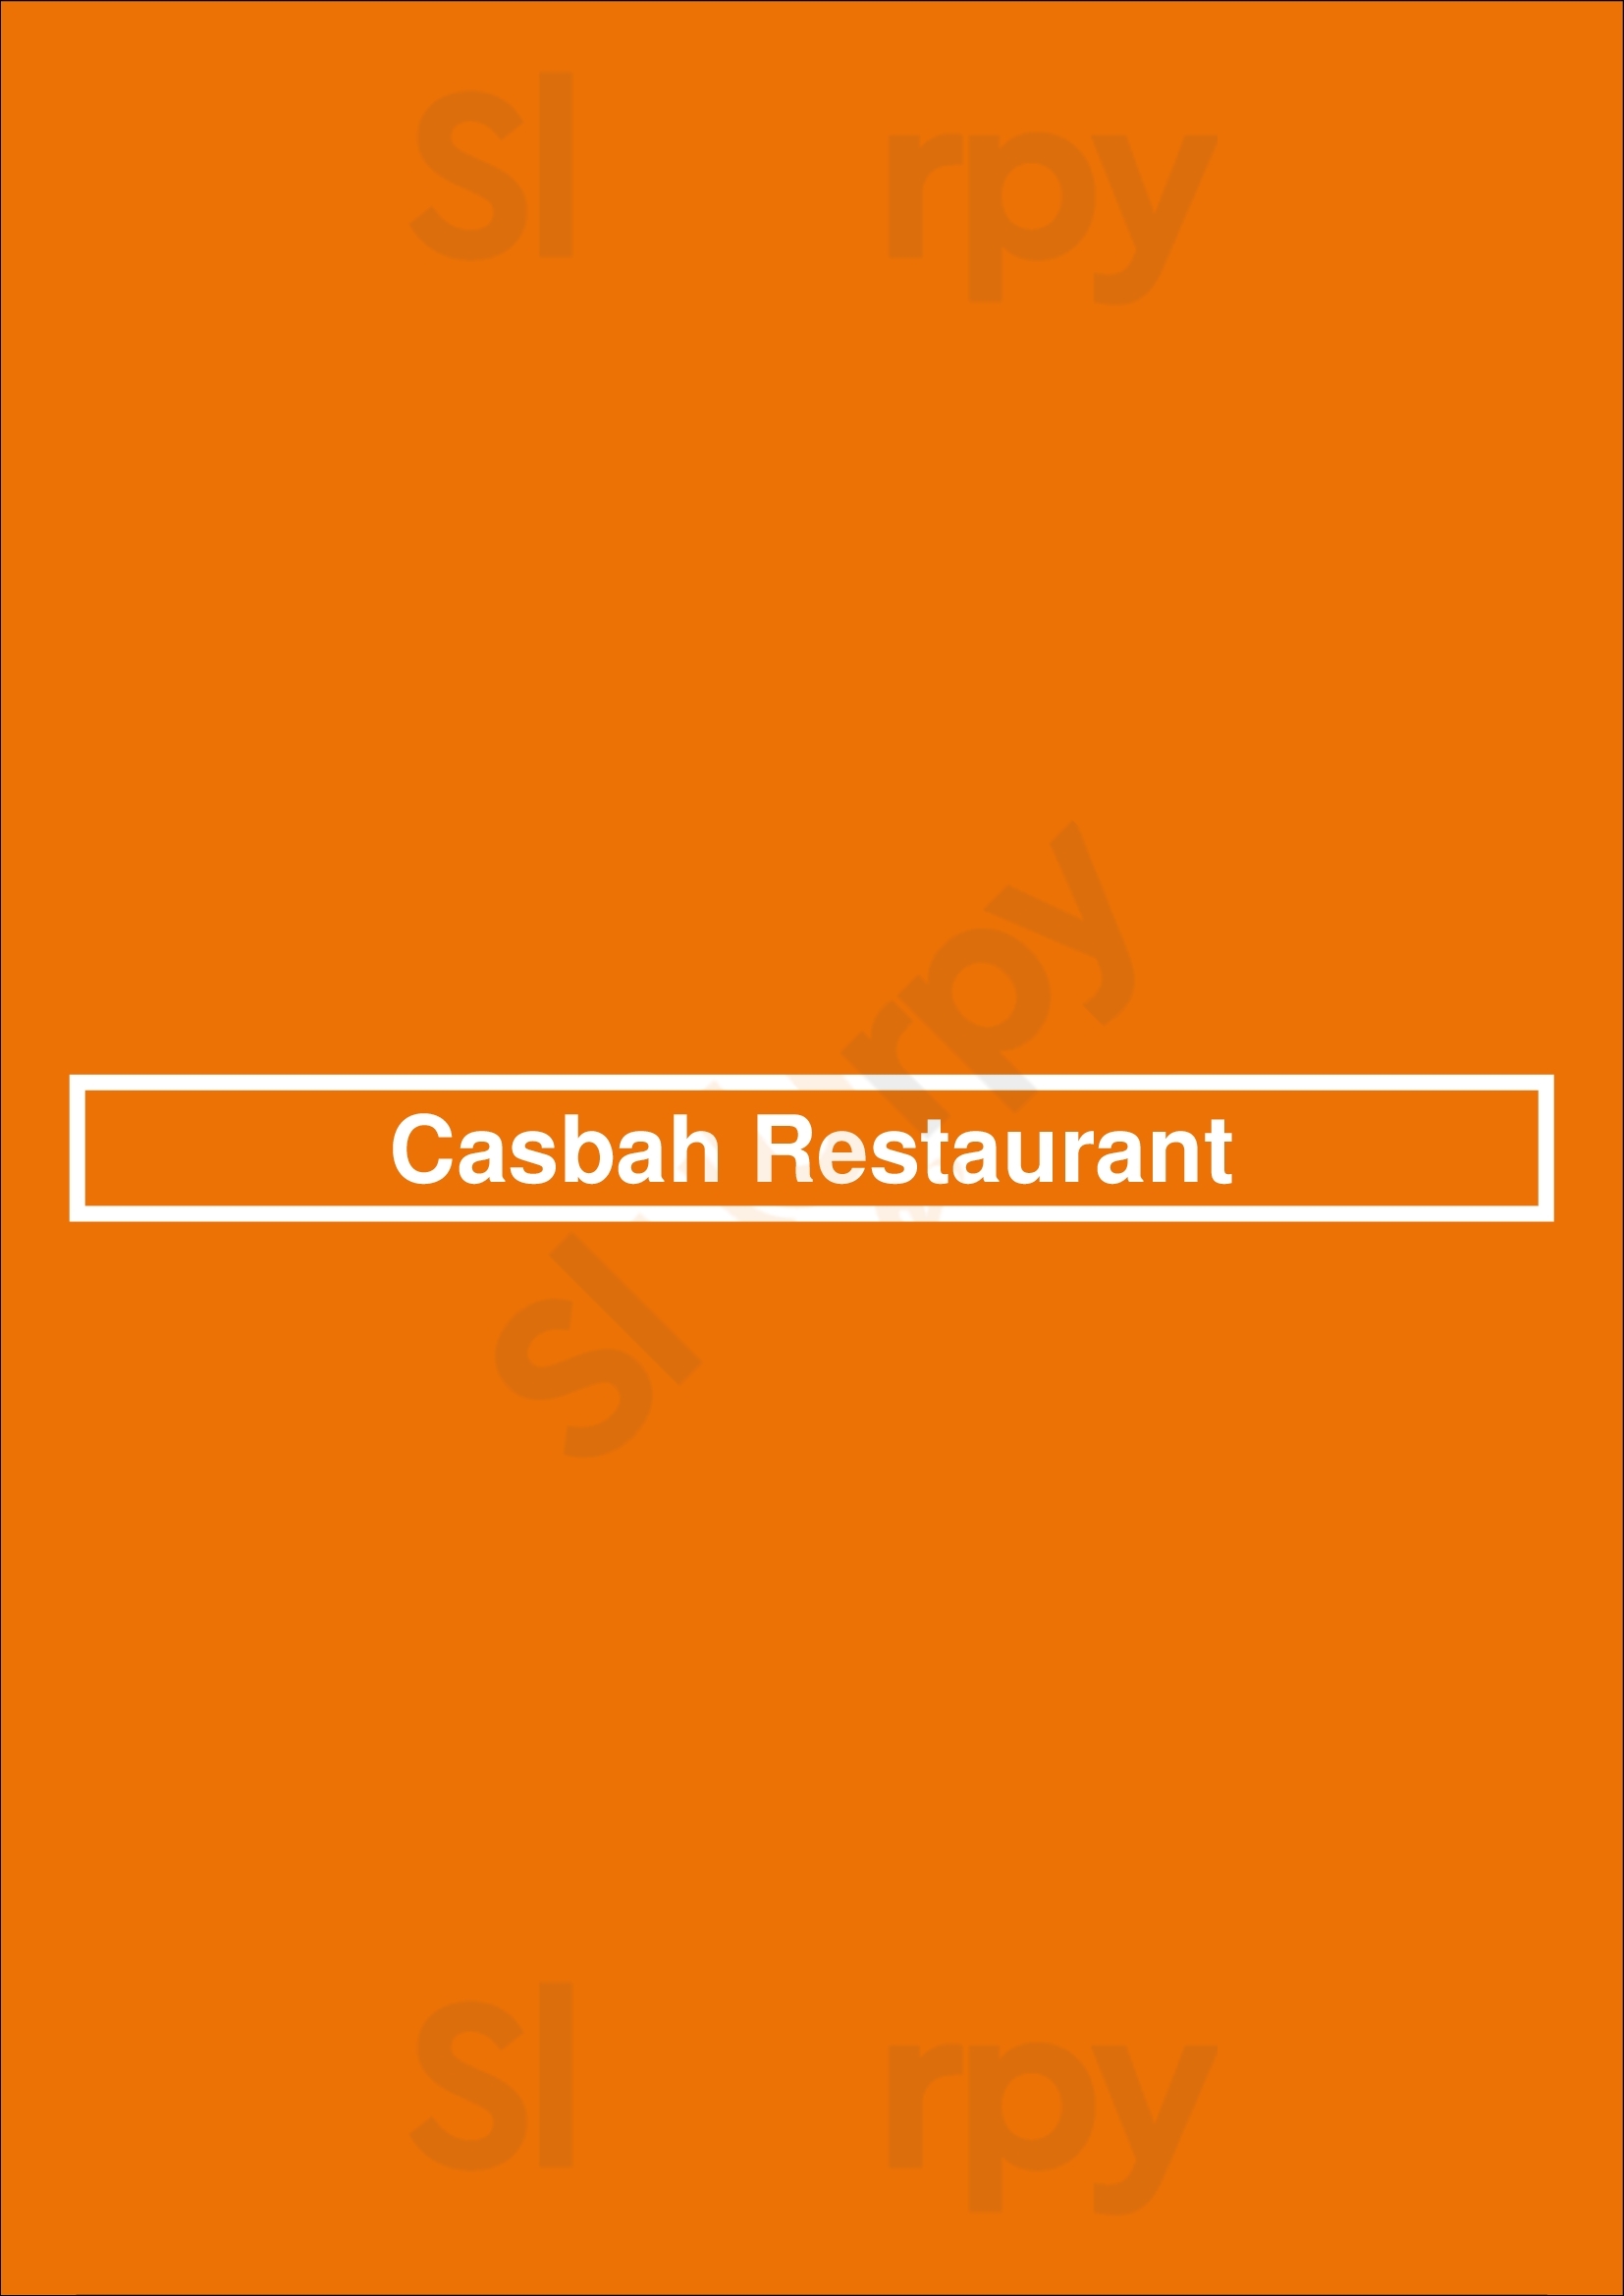 Casbah Restaurant Calgary Menu - 1